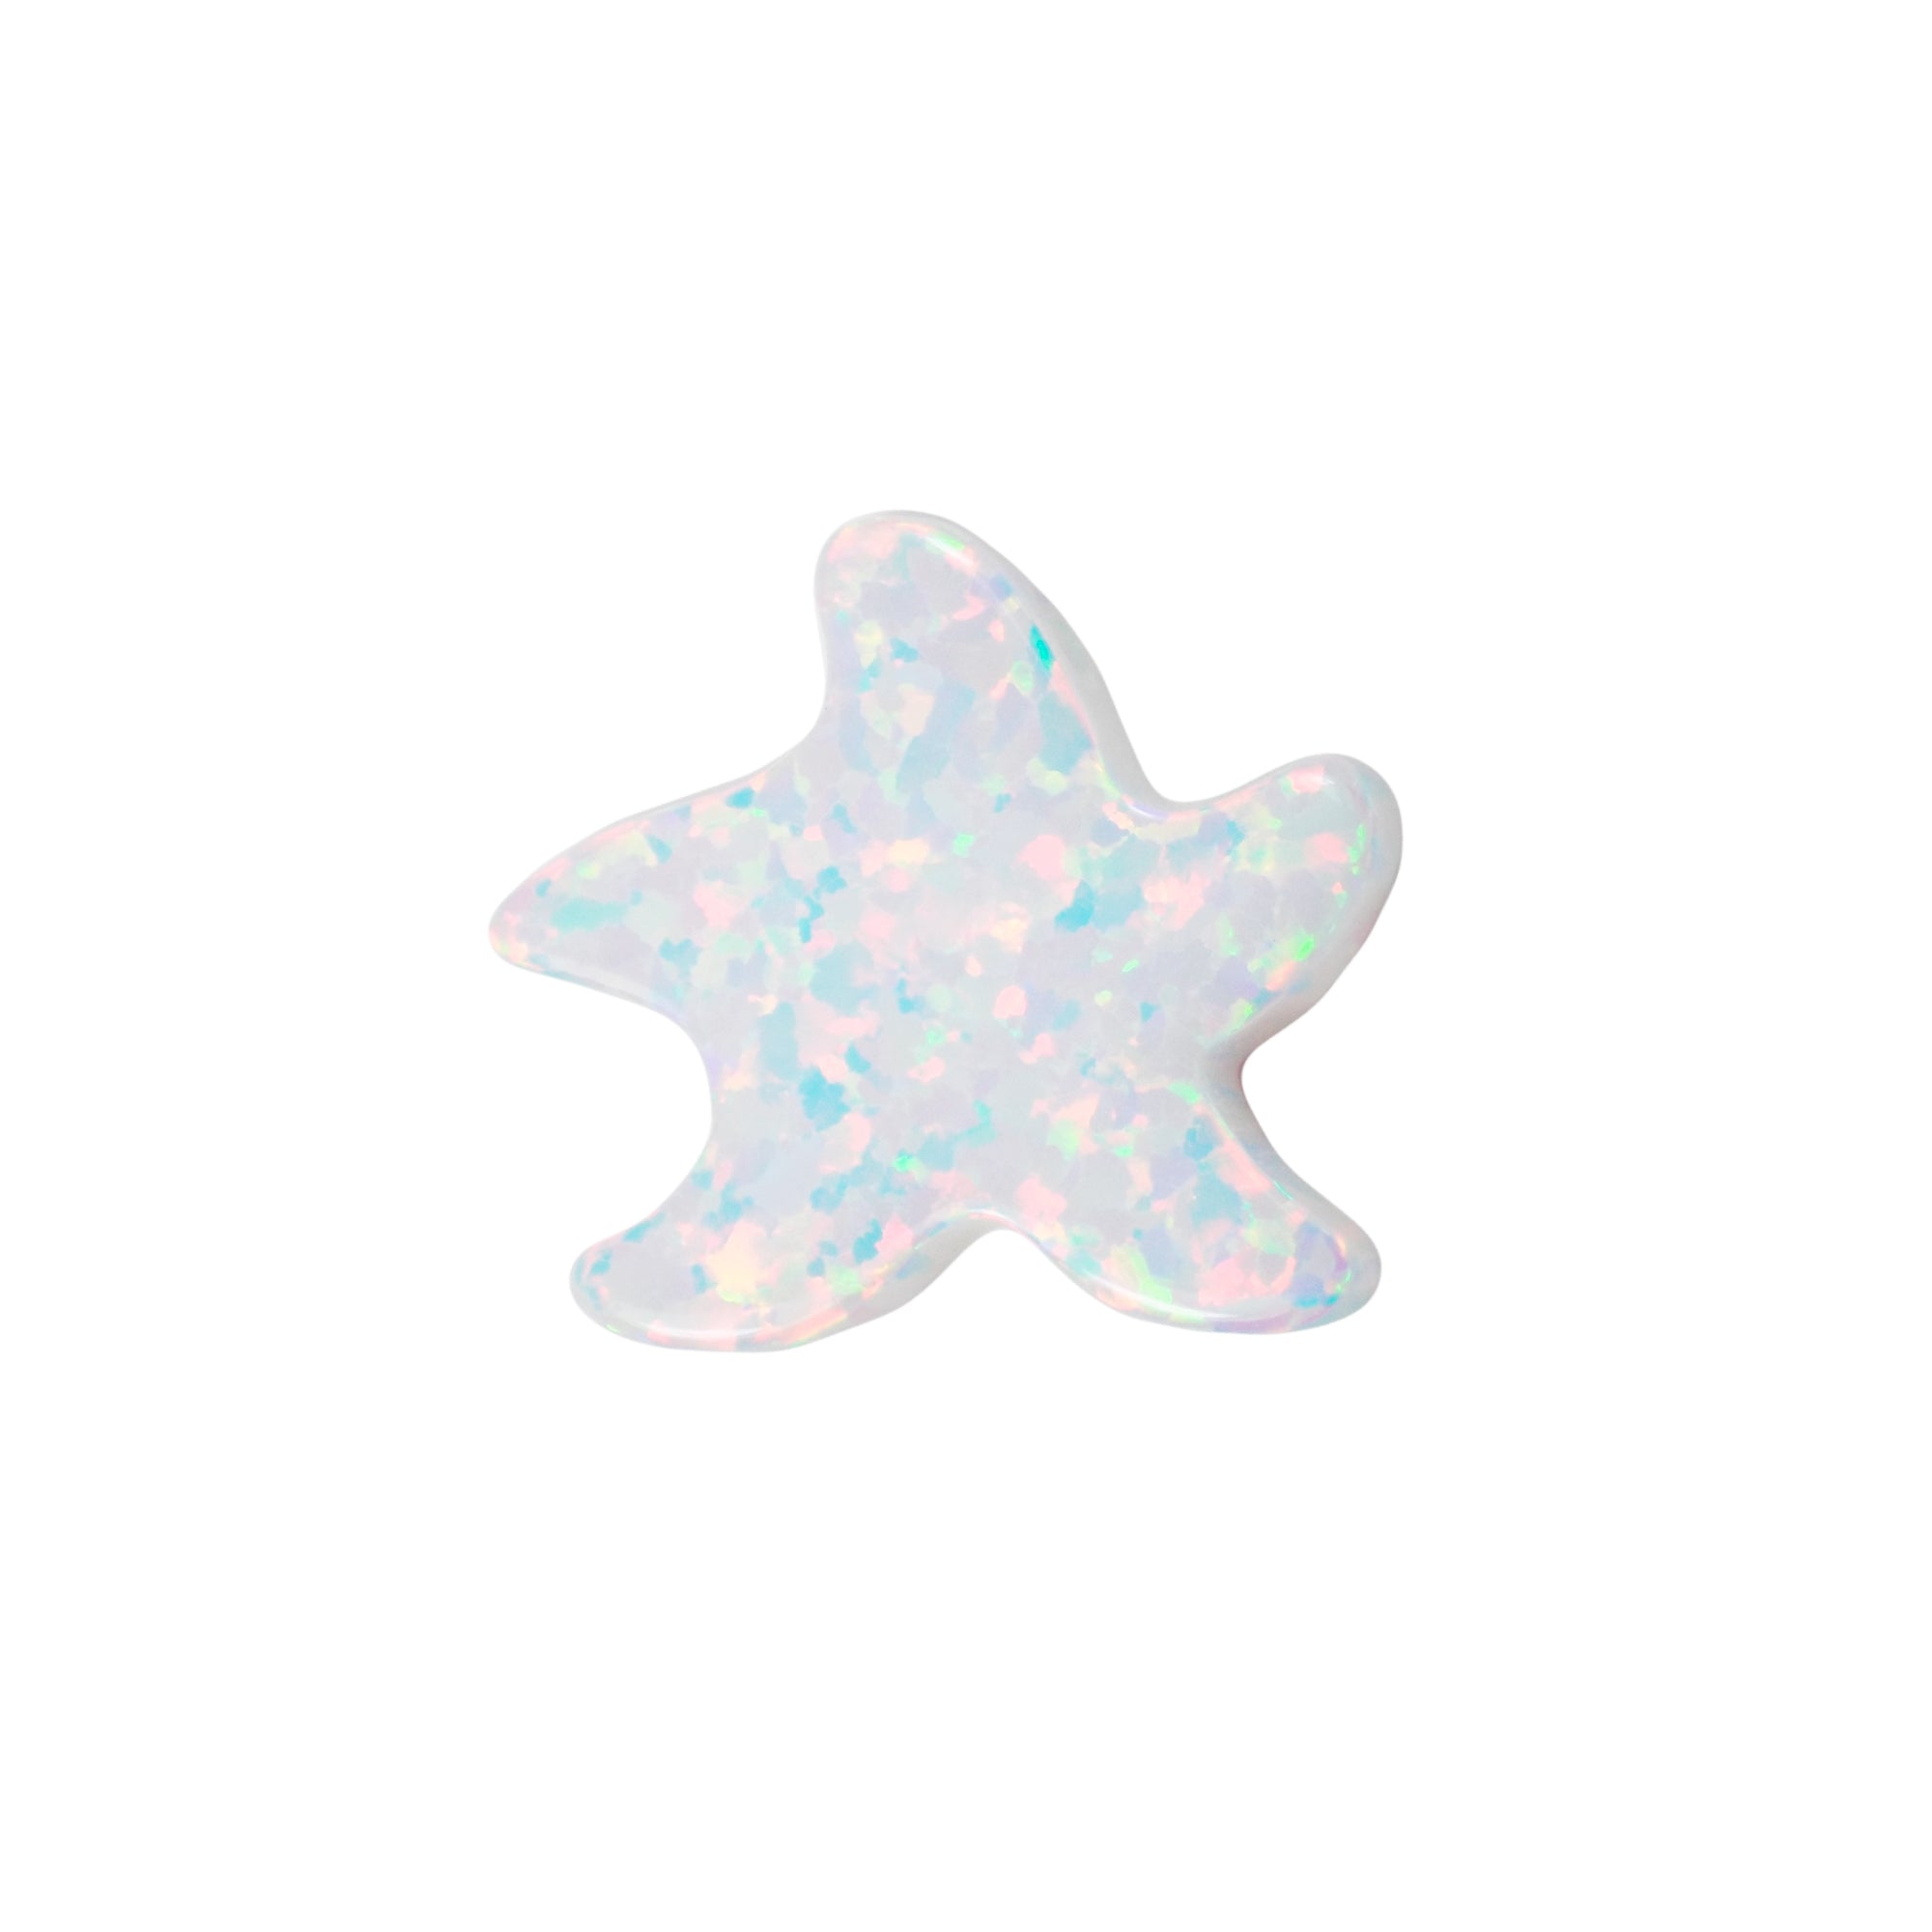 Sea star opal charm